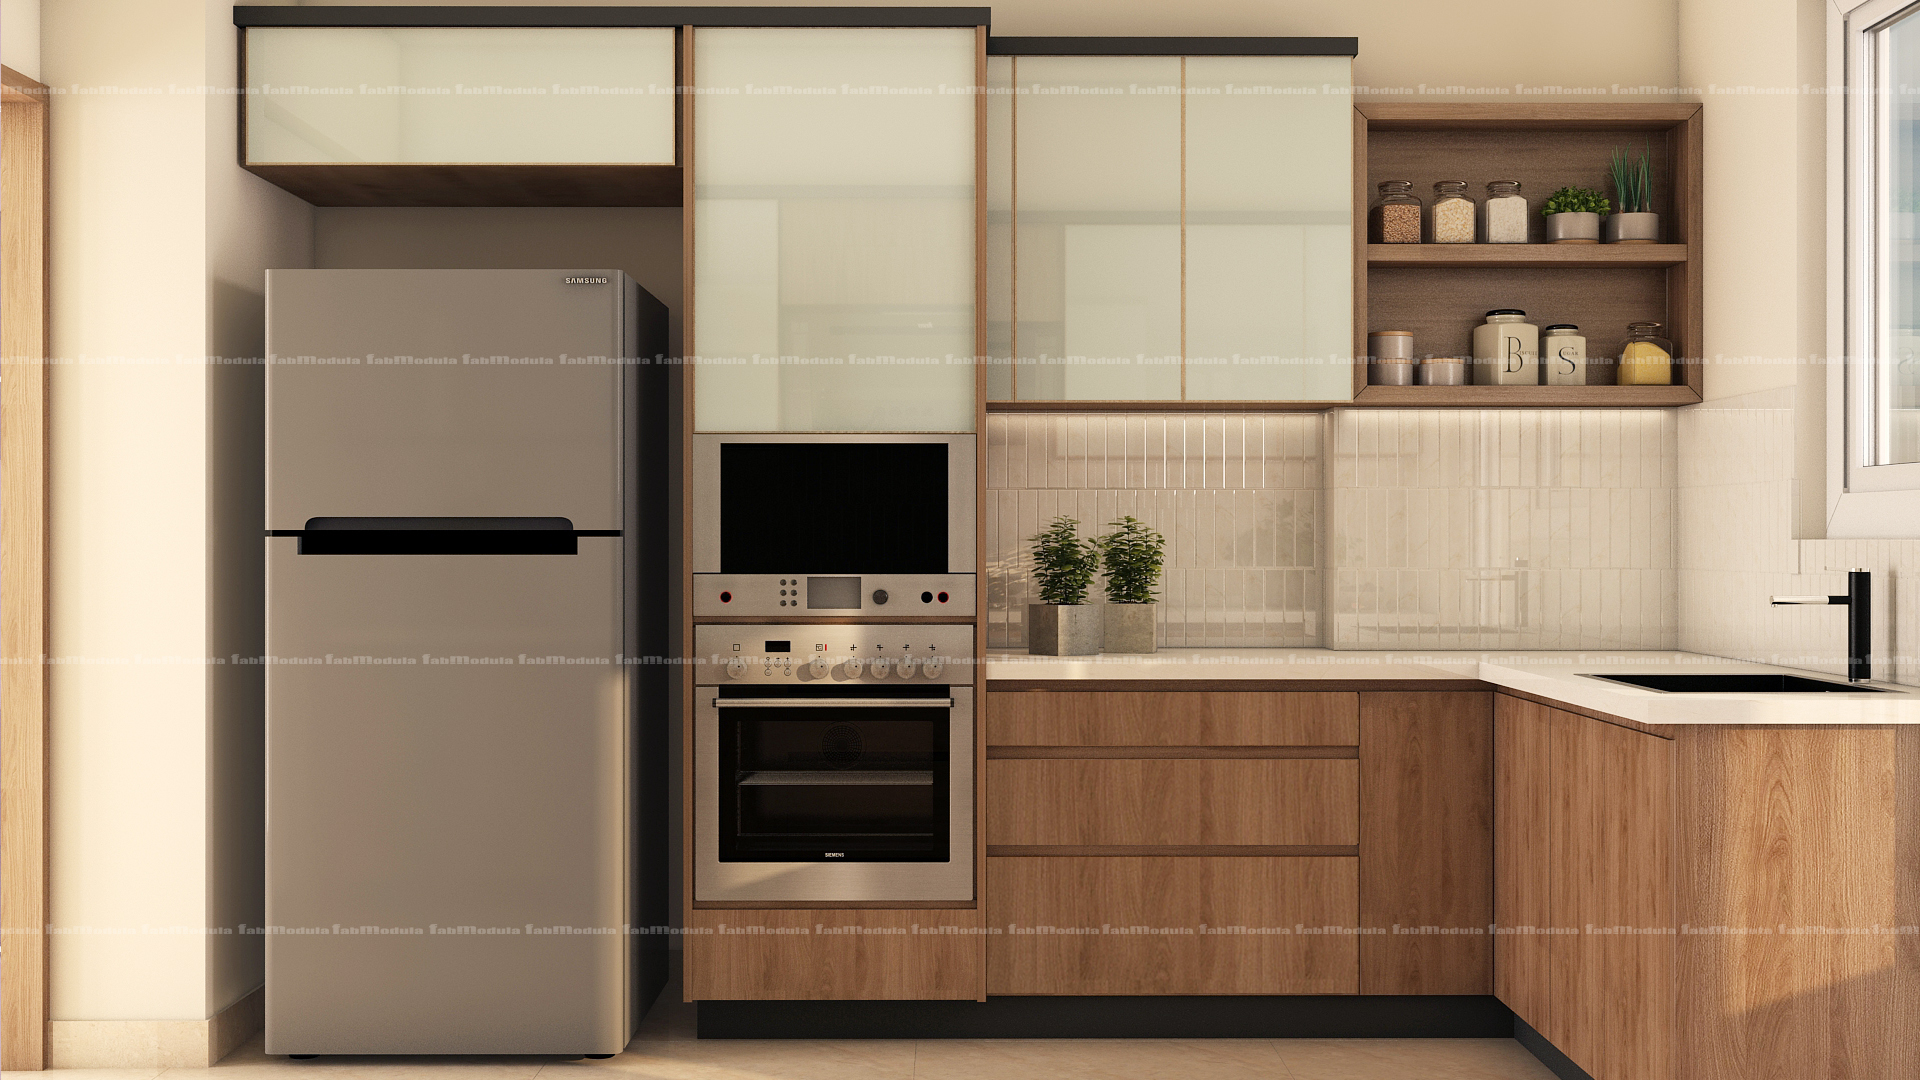 FabModula parallel modular kitchen with refrigerator